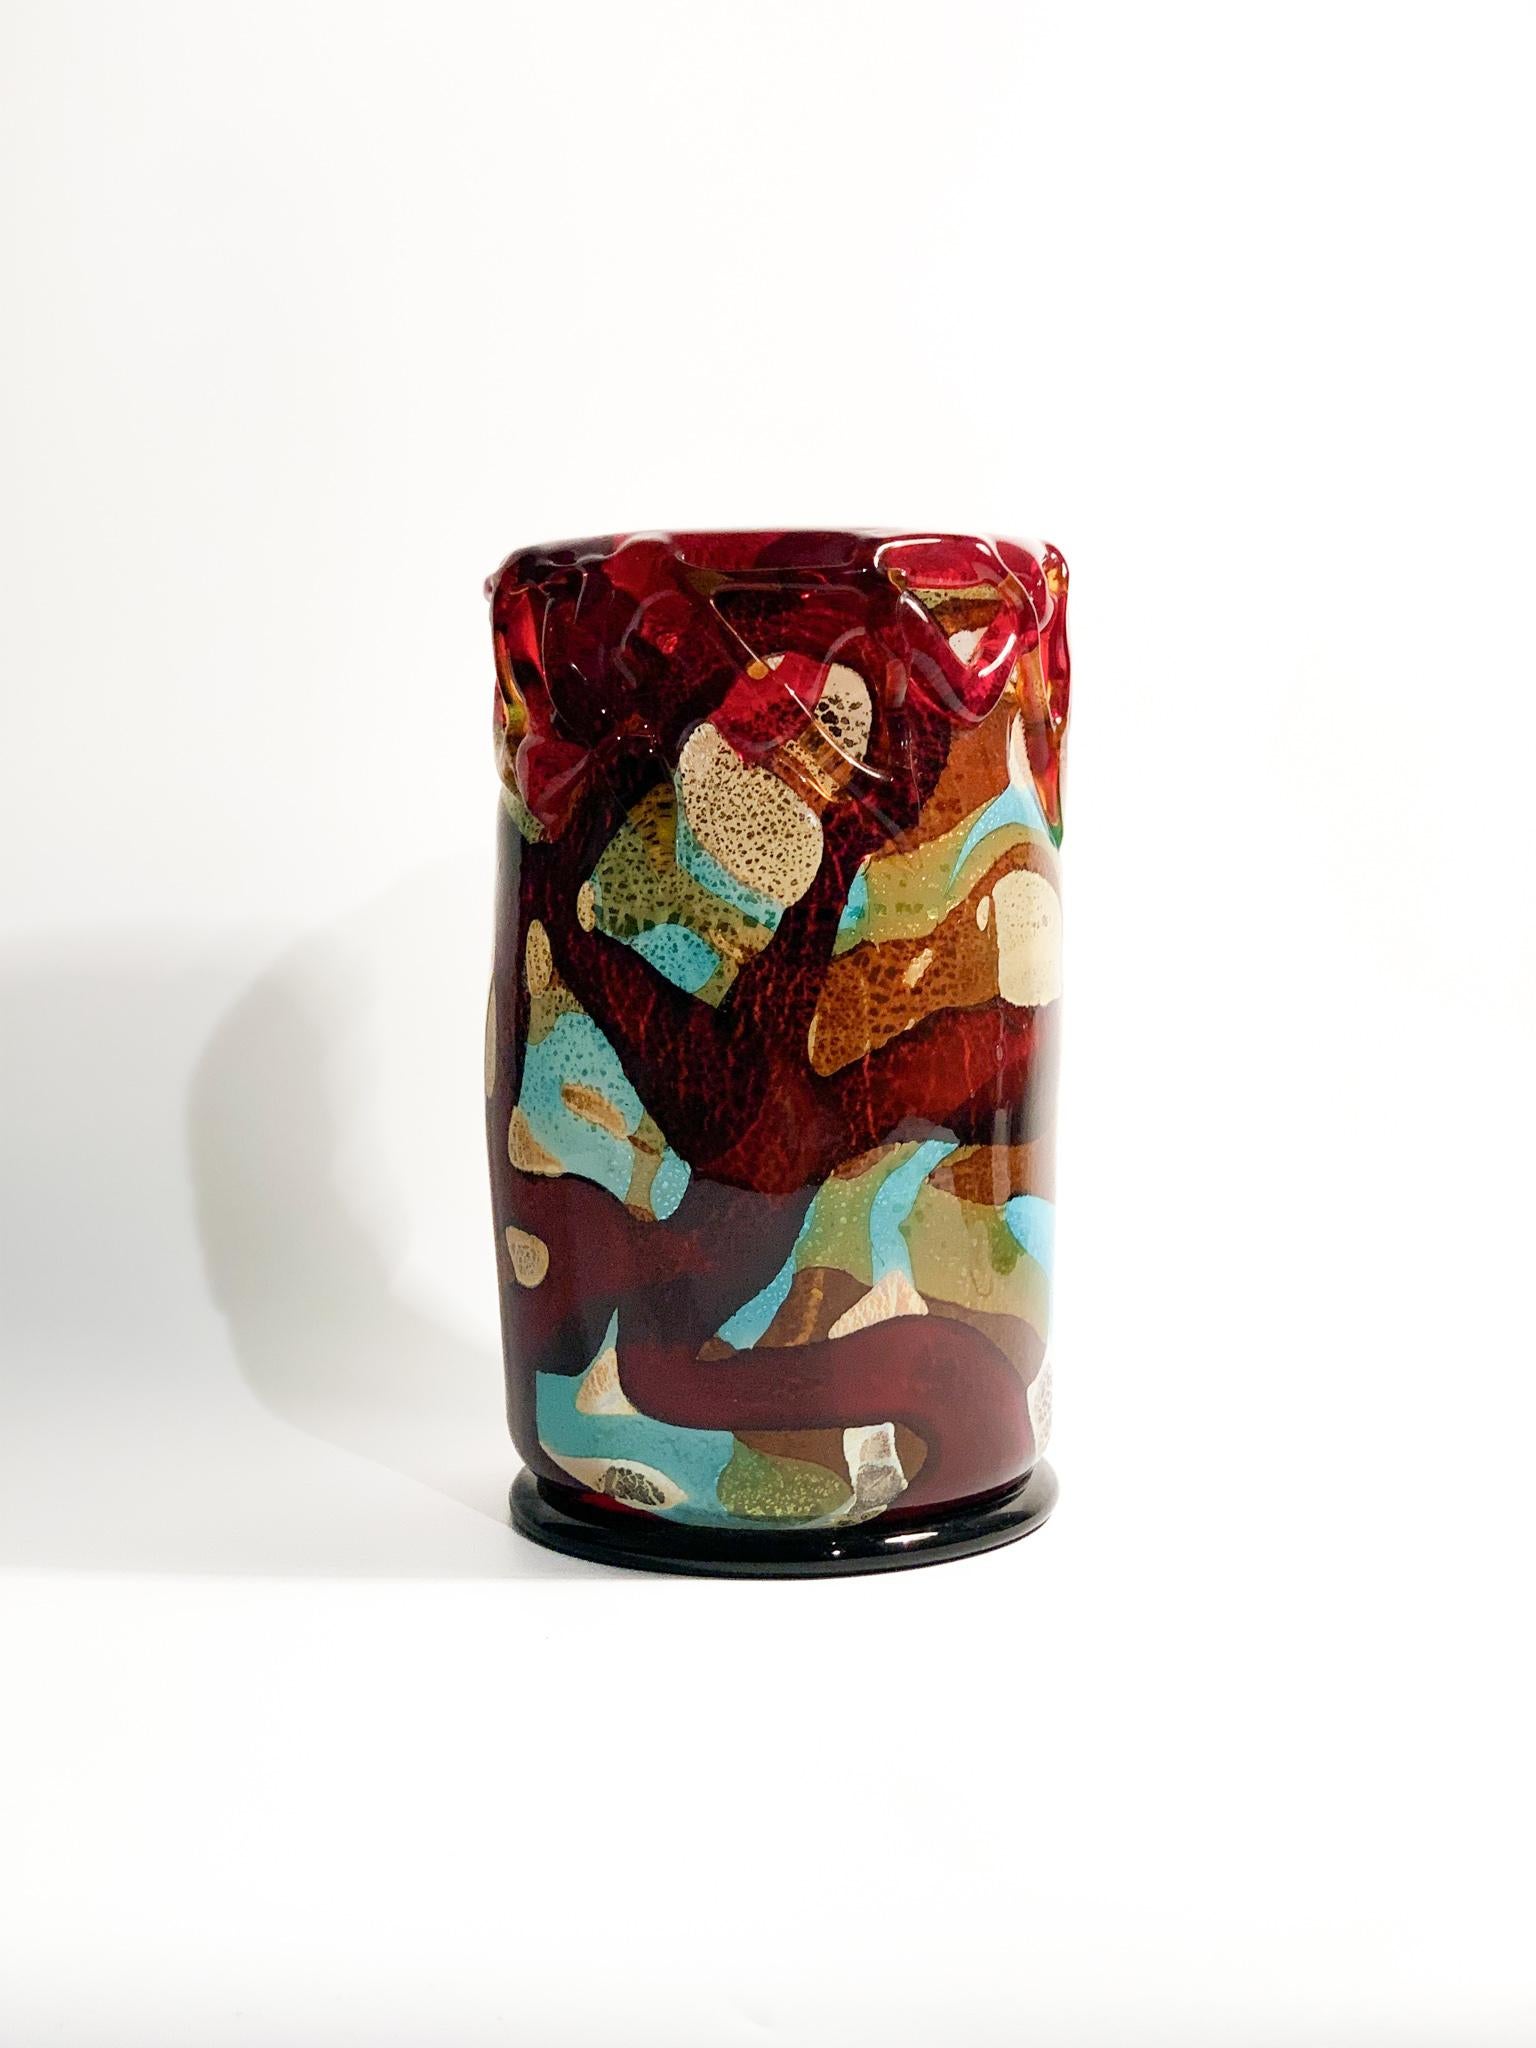 Multicolored Murano glass vase, made by Sergio Costantini in the 1980s

Ø 15 cm h 27 cm